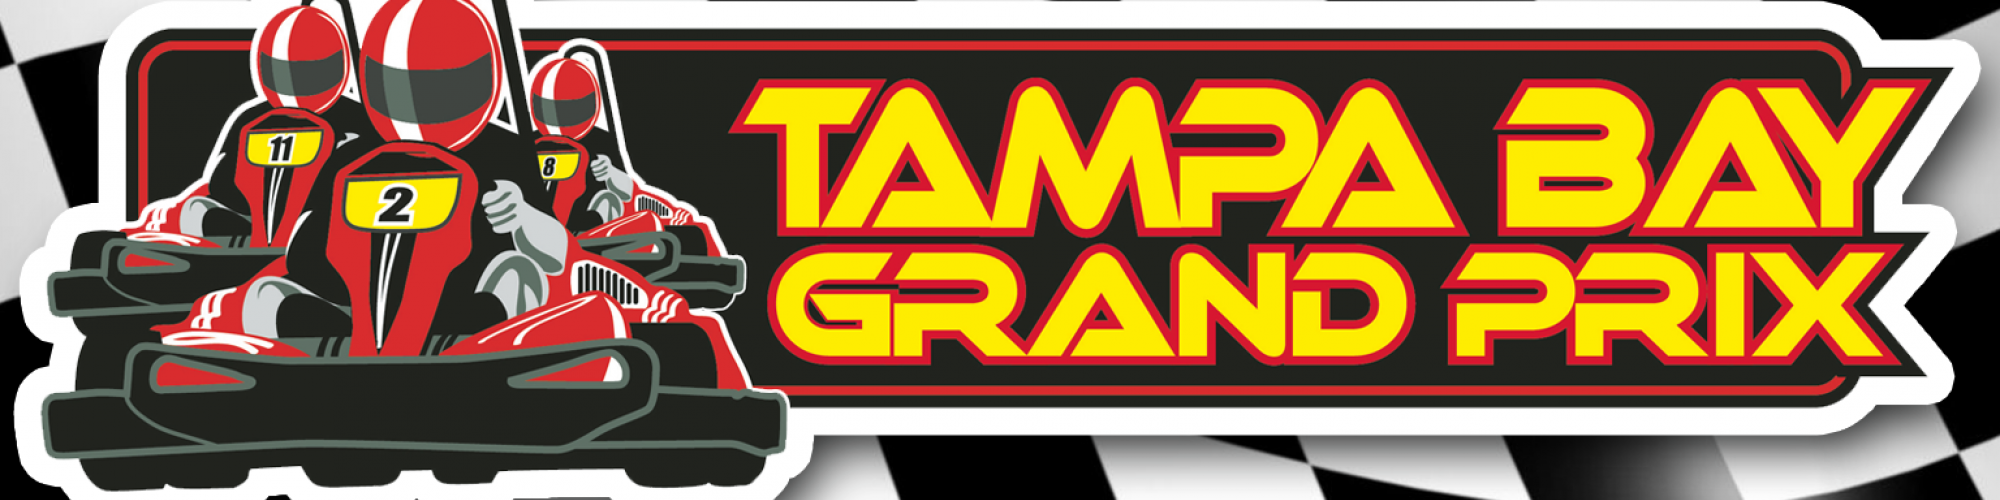 Tampa Bay Grand Prix cover image